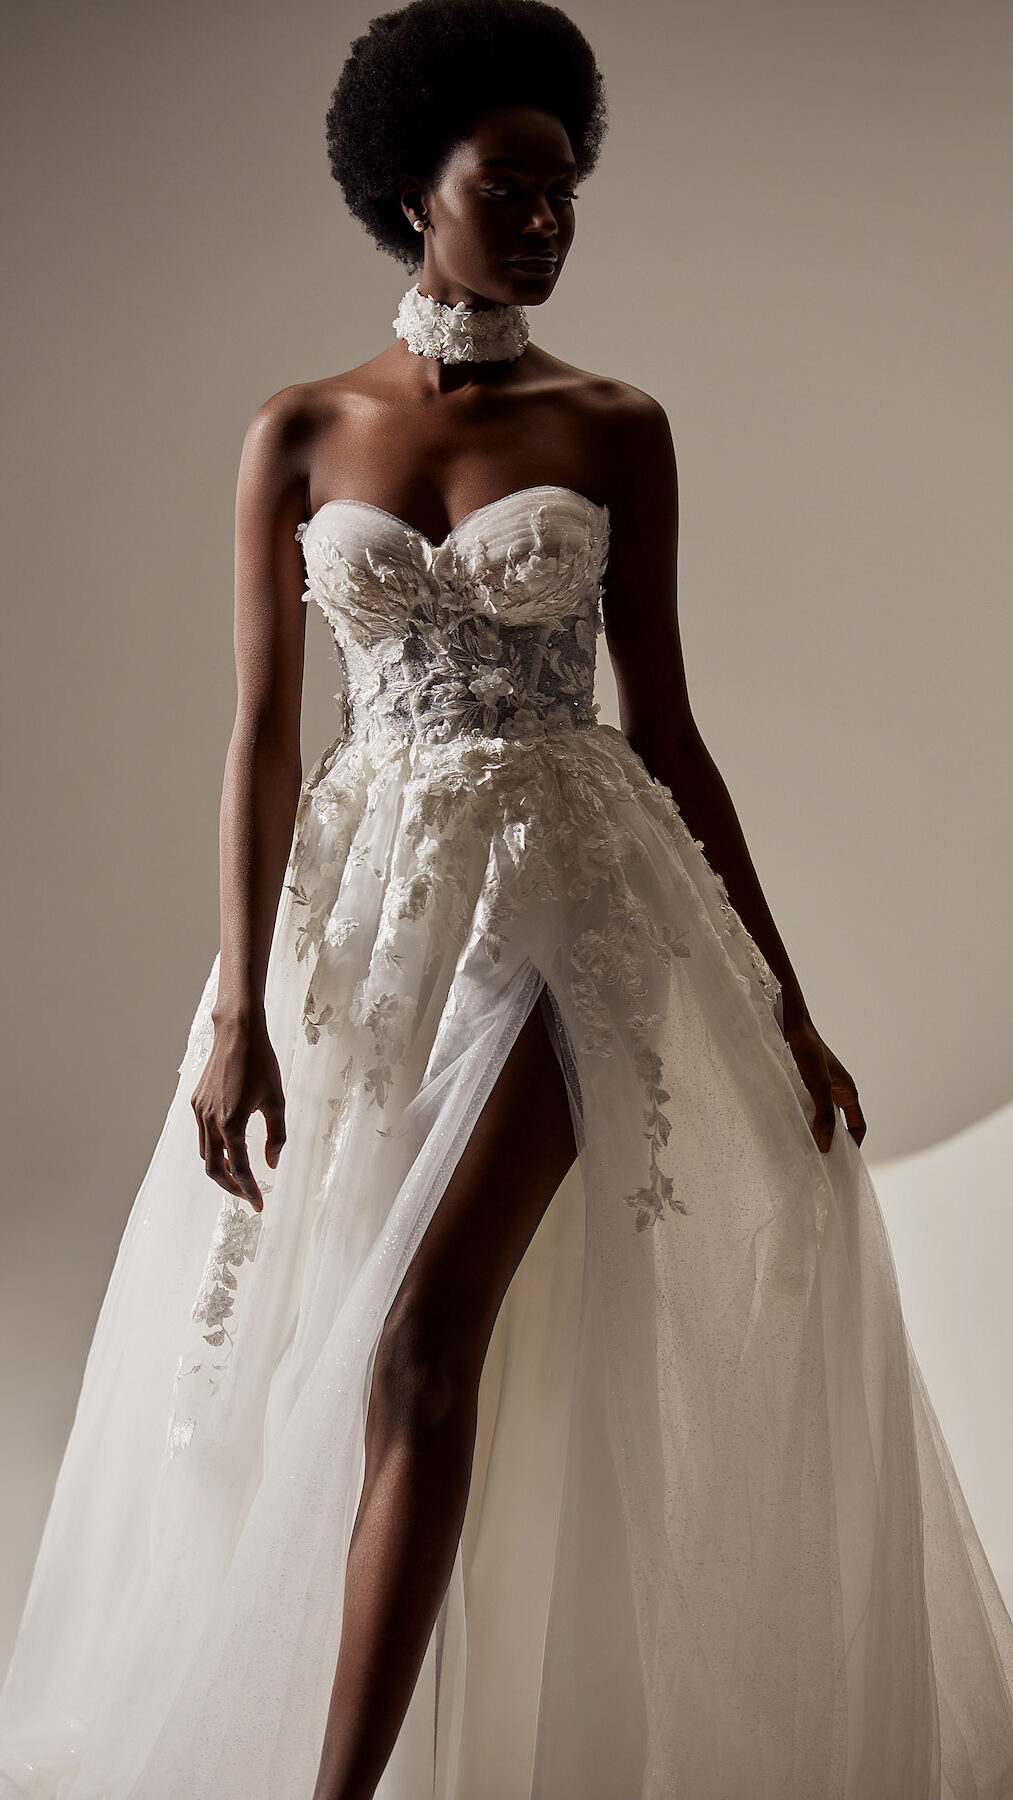 Strapless Wedding Dresses by Milla Nova - Vlada white lace day